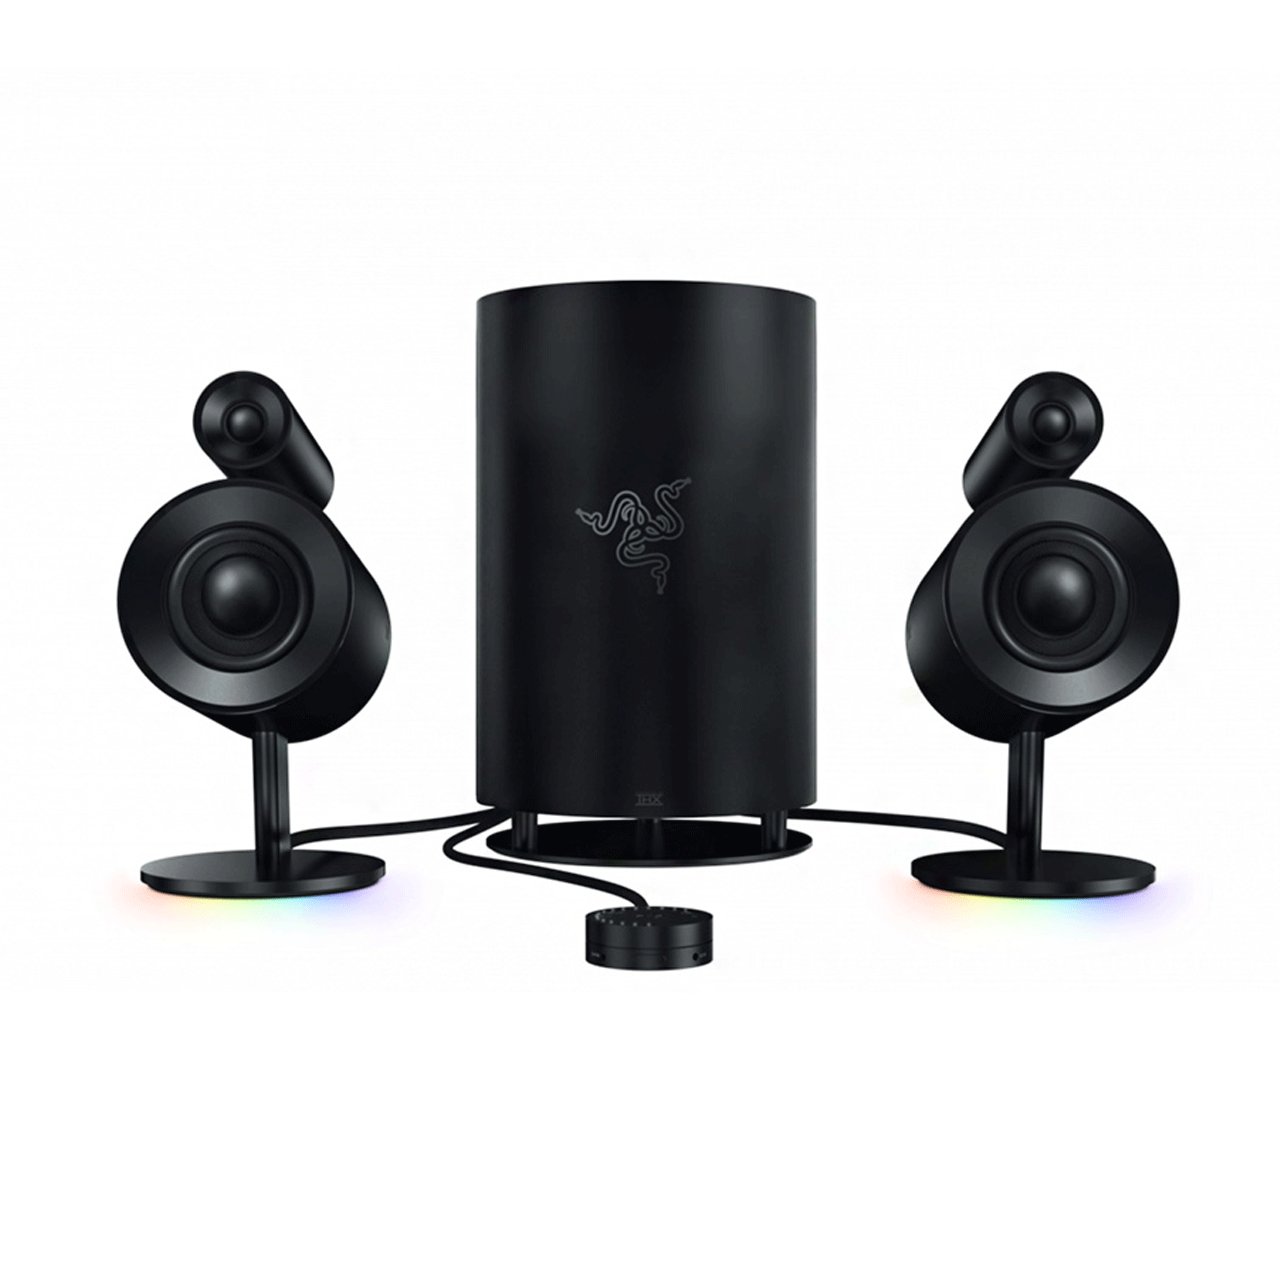 Razer-Nommo-Pro-2.1-RGB-Gaming-Speakers